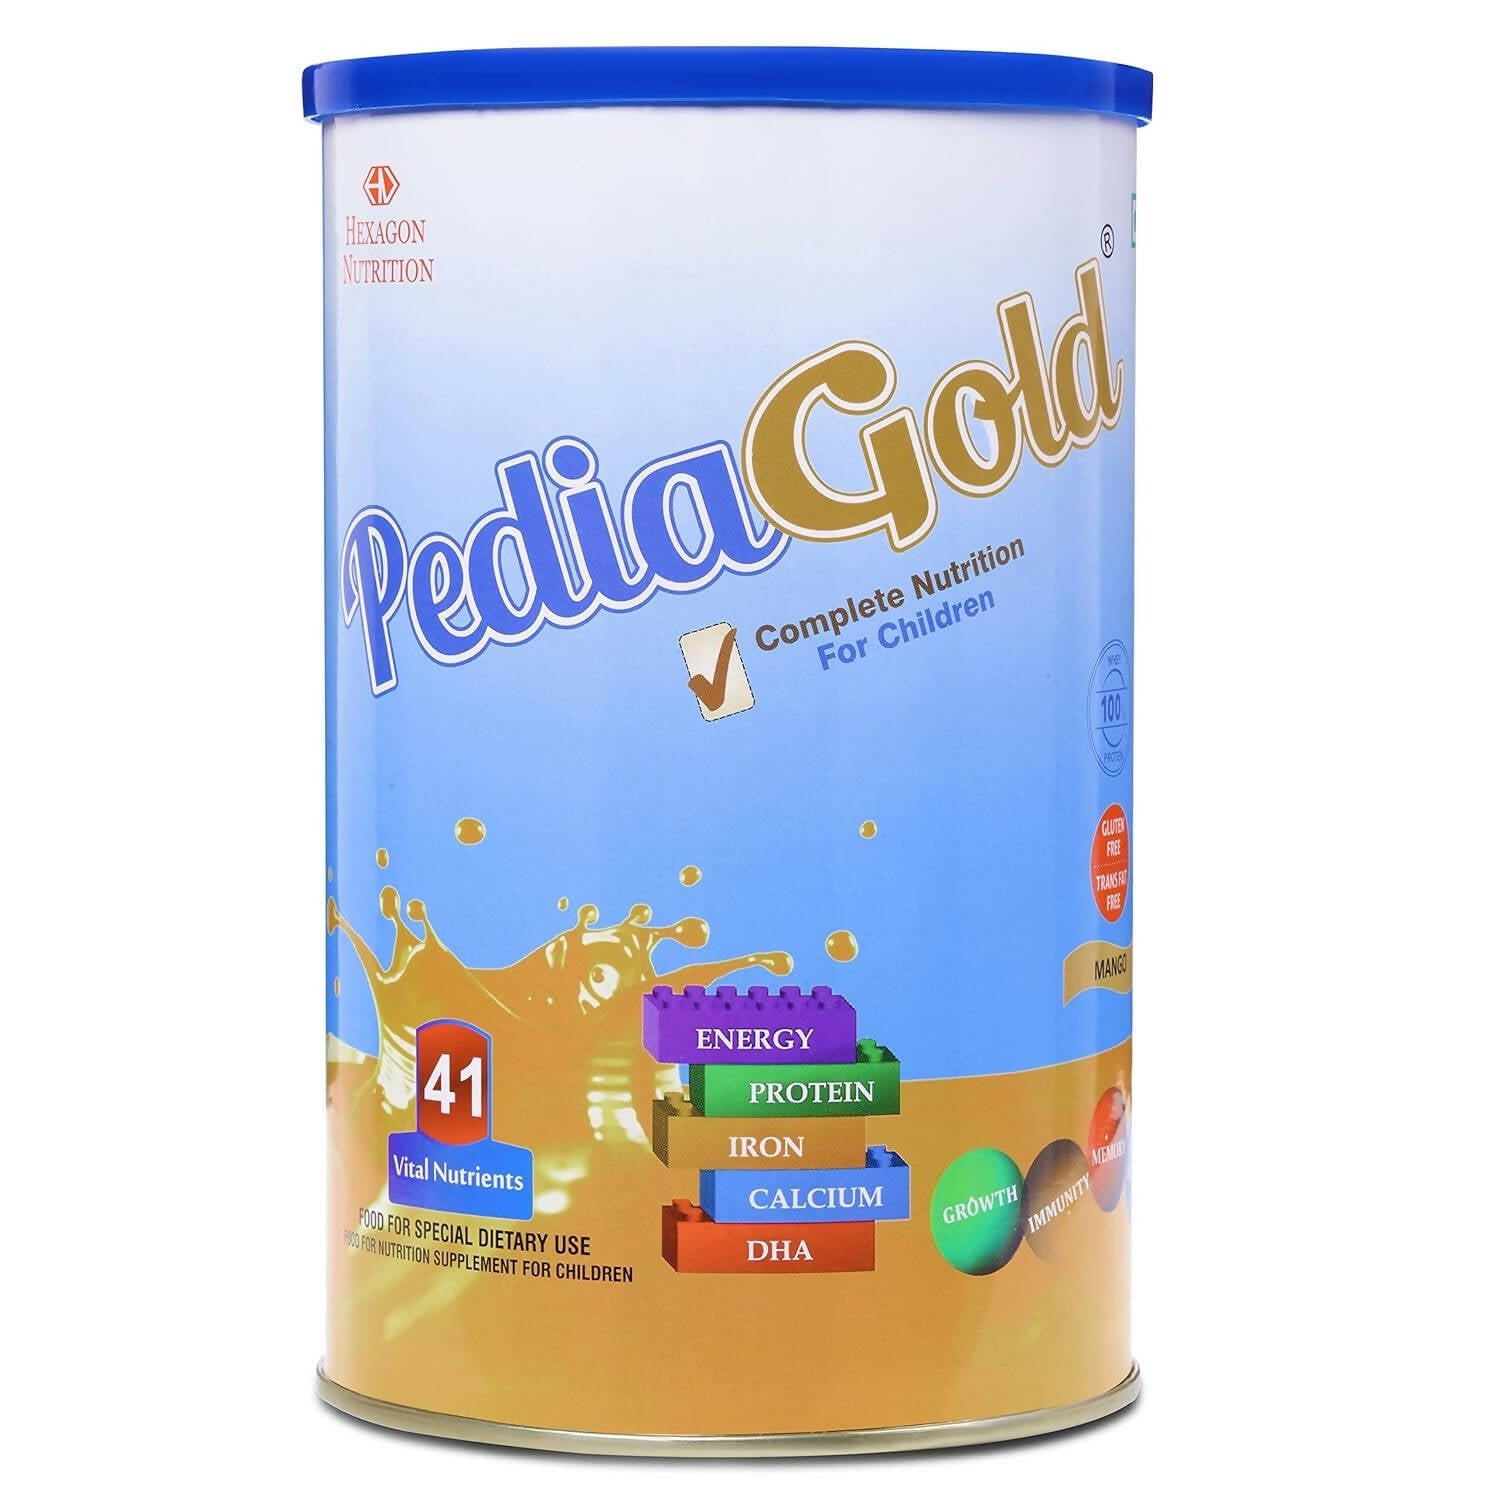 PediaGold Complete Nutrition Powder For Children - BUDNE